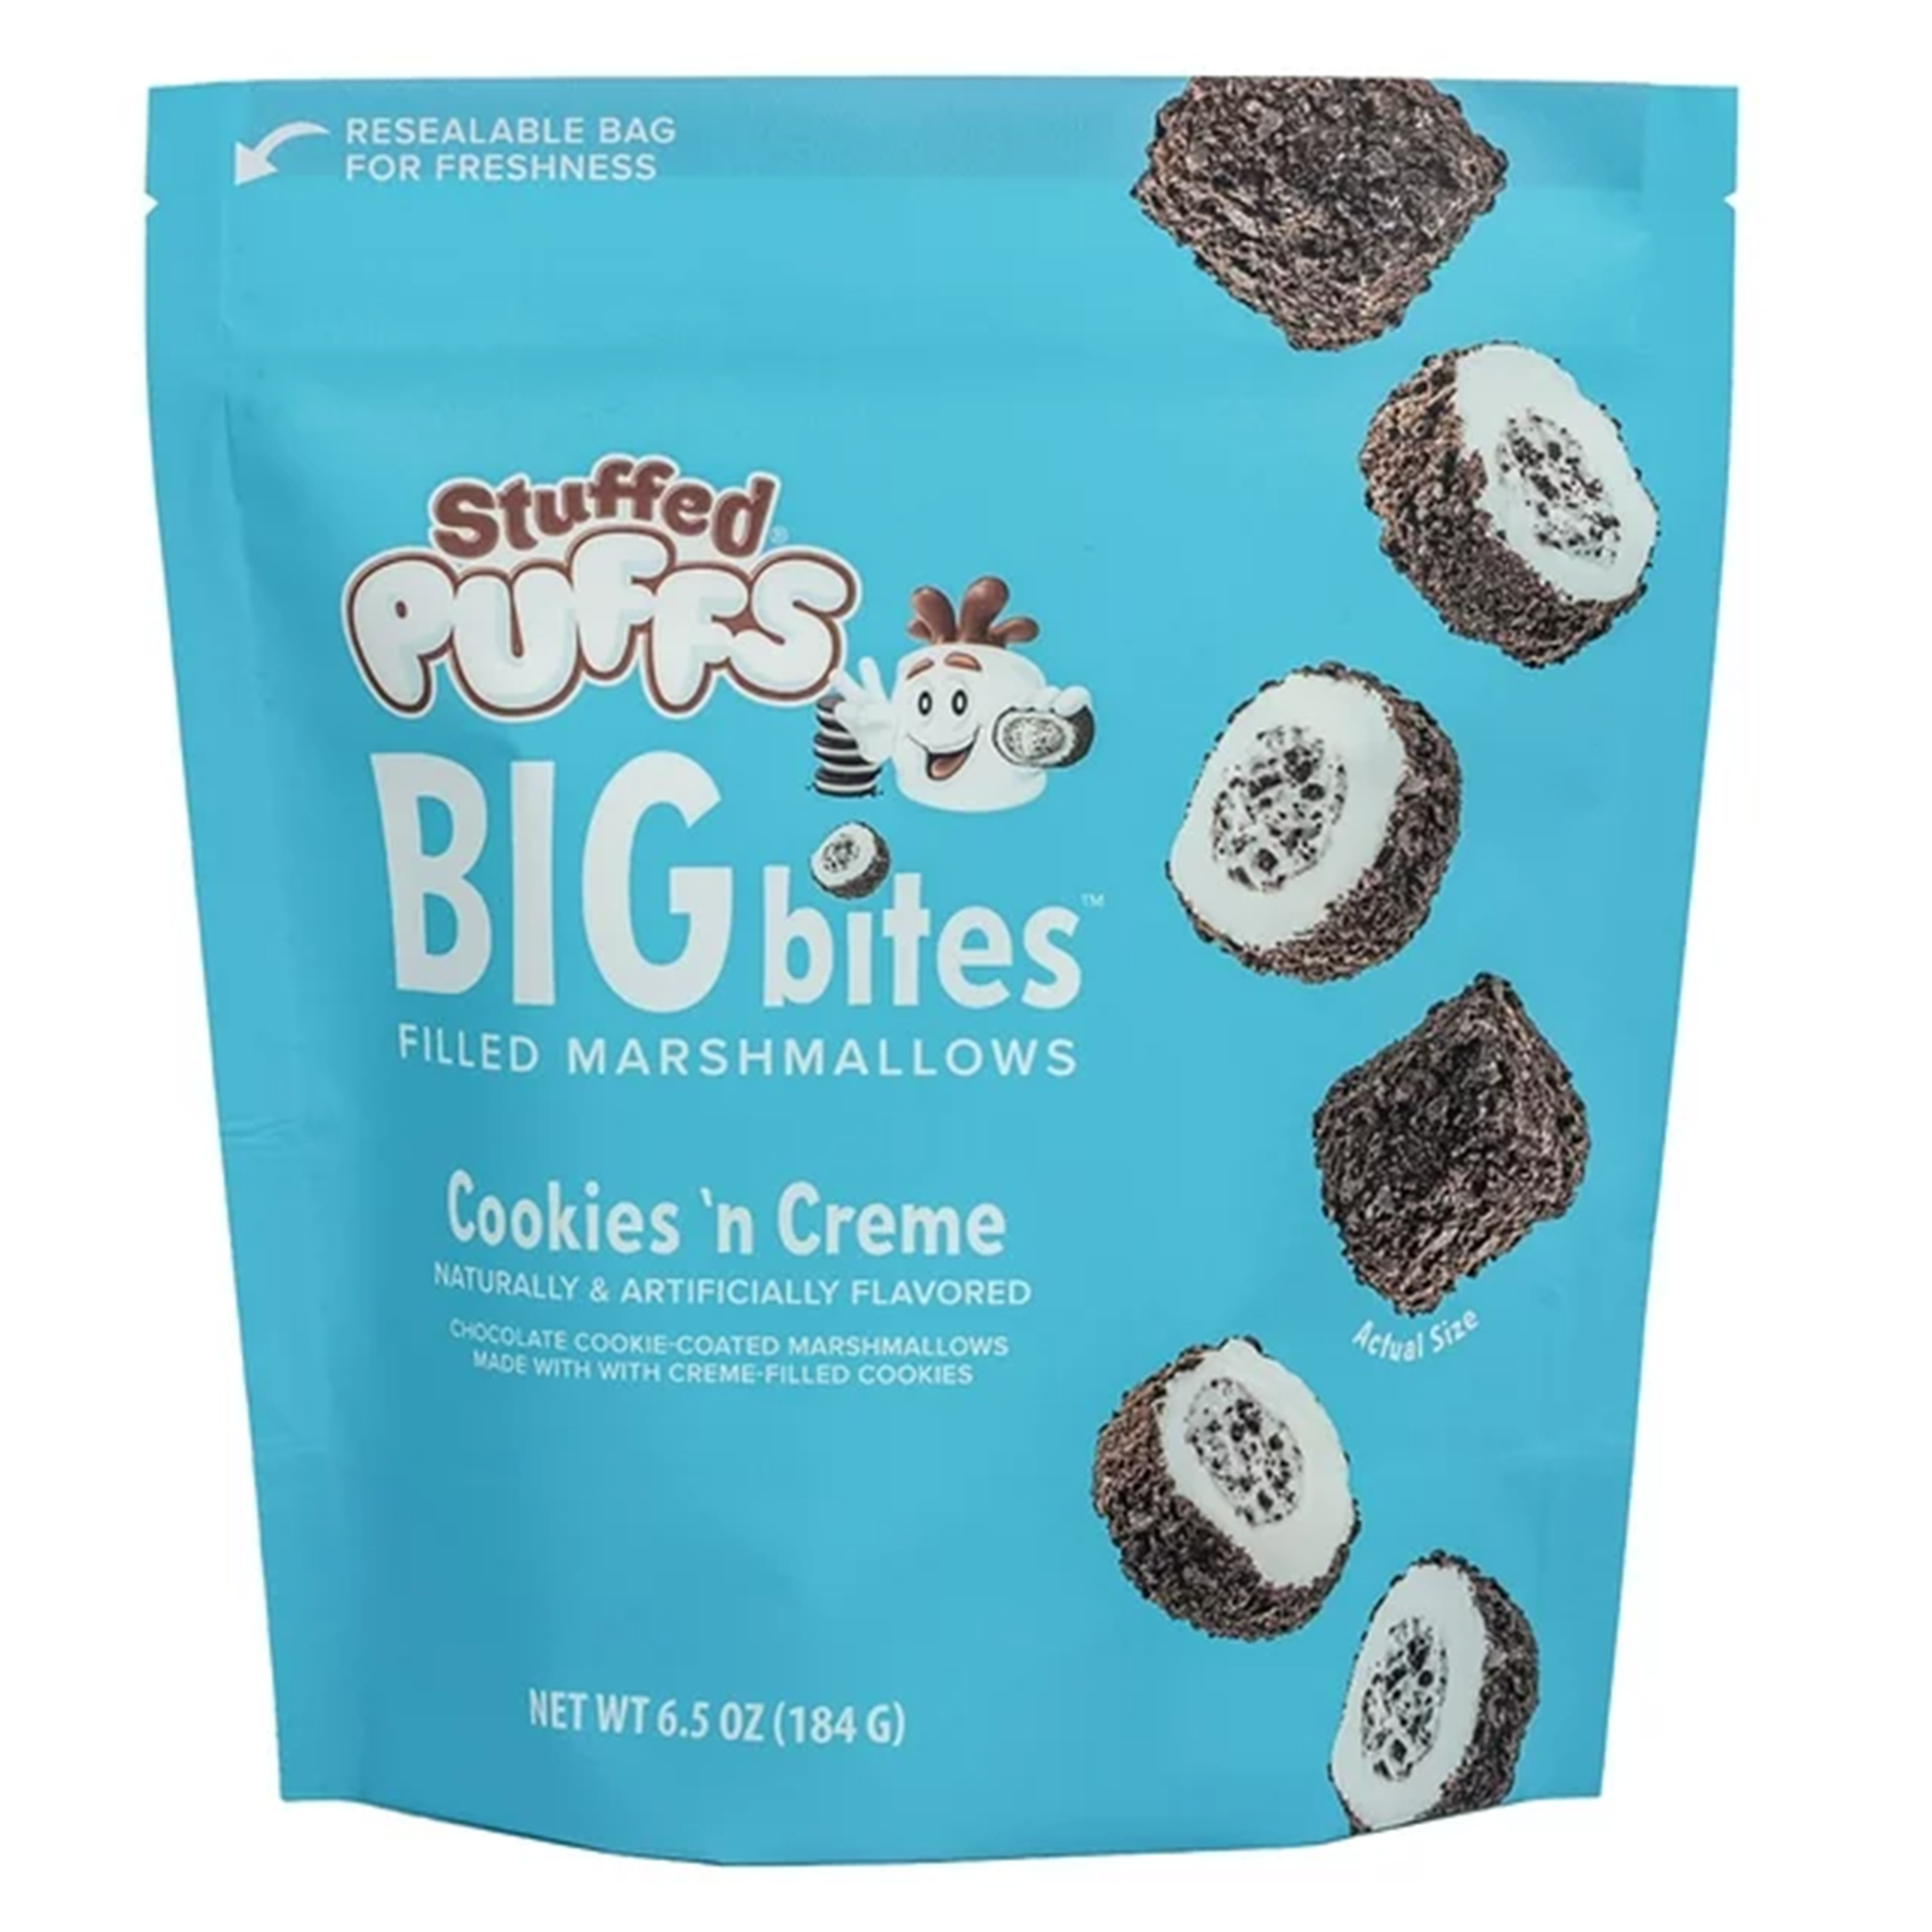 Stuffed Puffs Big Bites - Cookies & Cream Filled Marshmallows